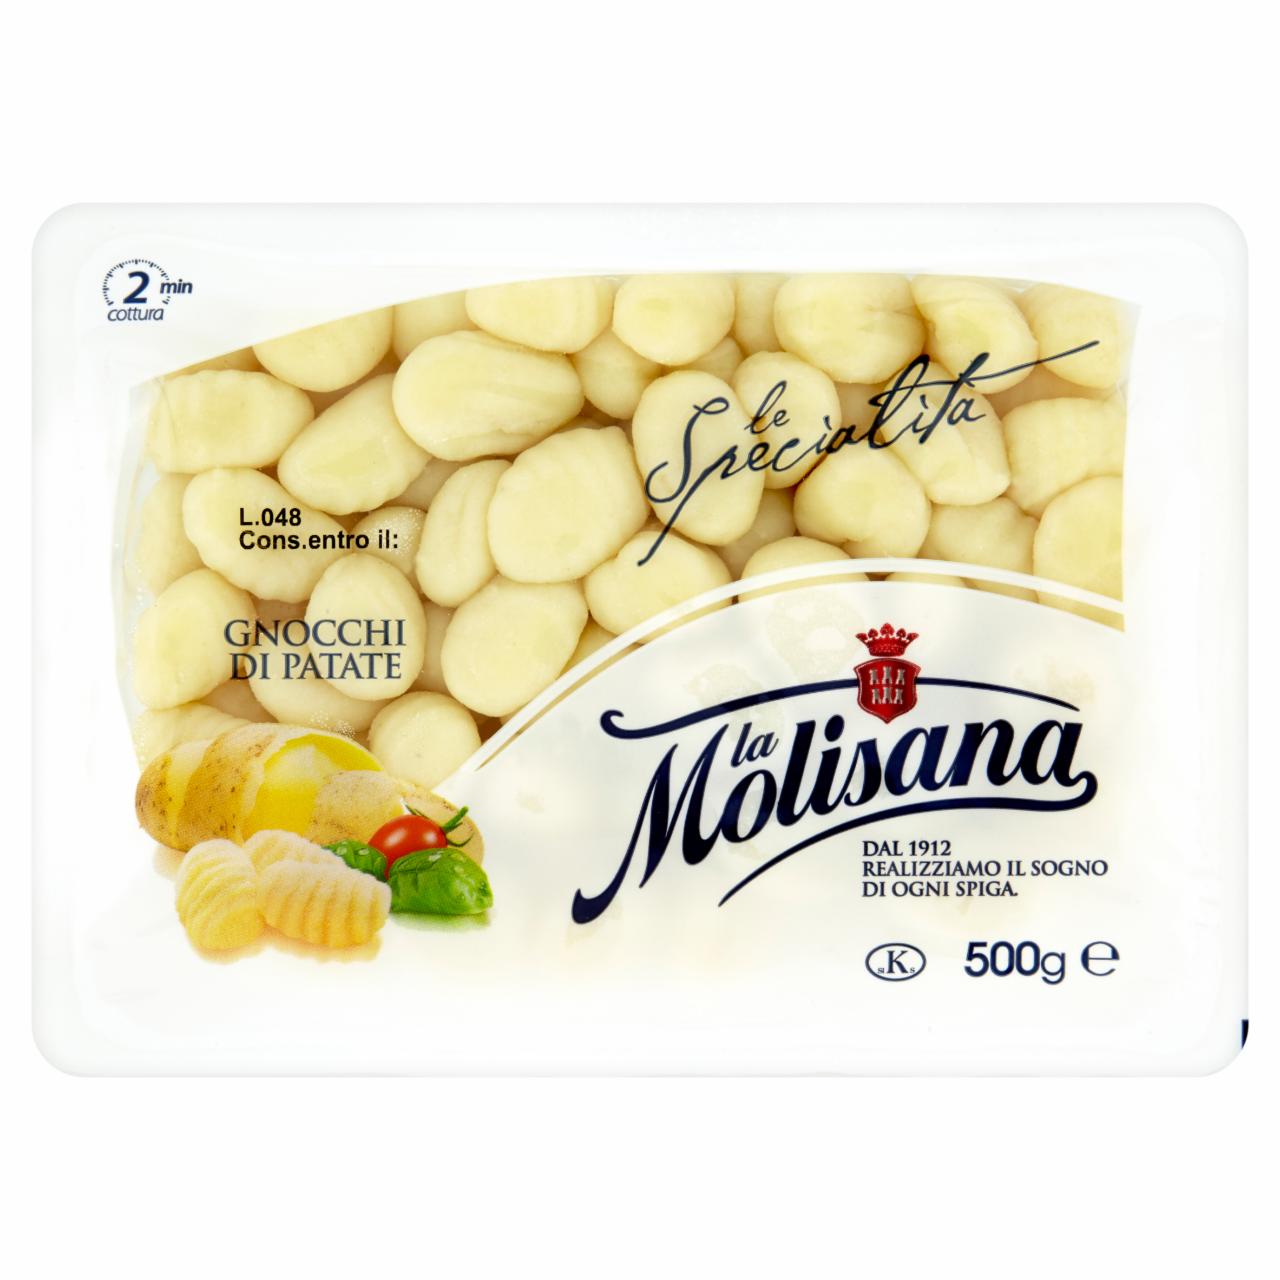 Képek - La Molisana gnocchi 500 g